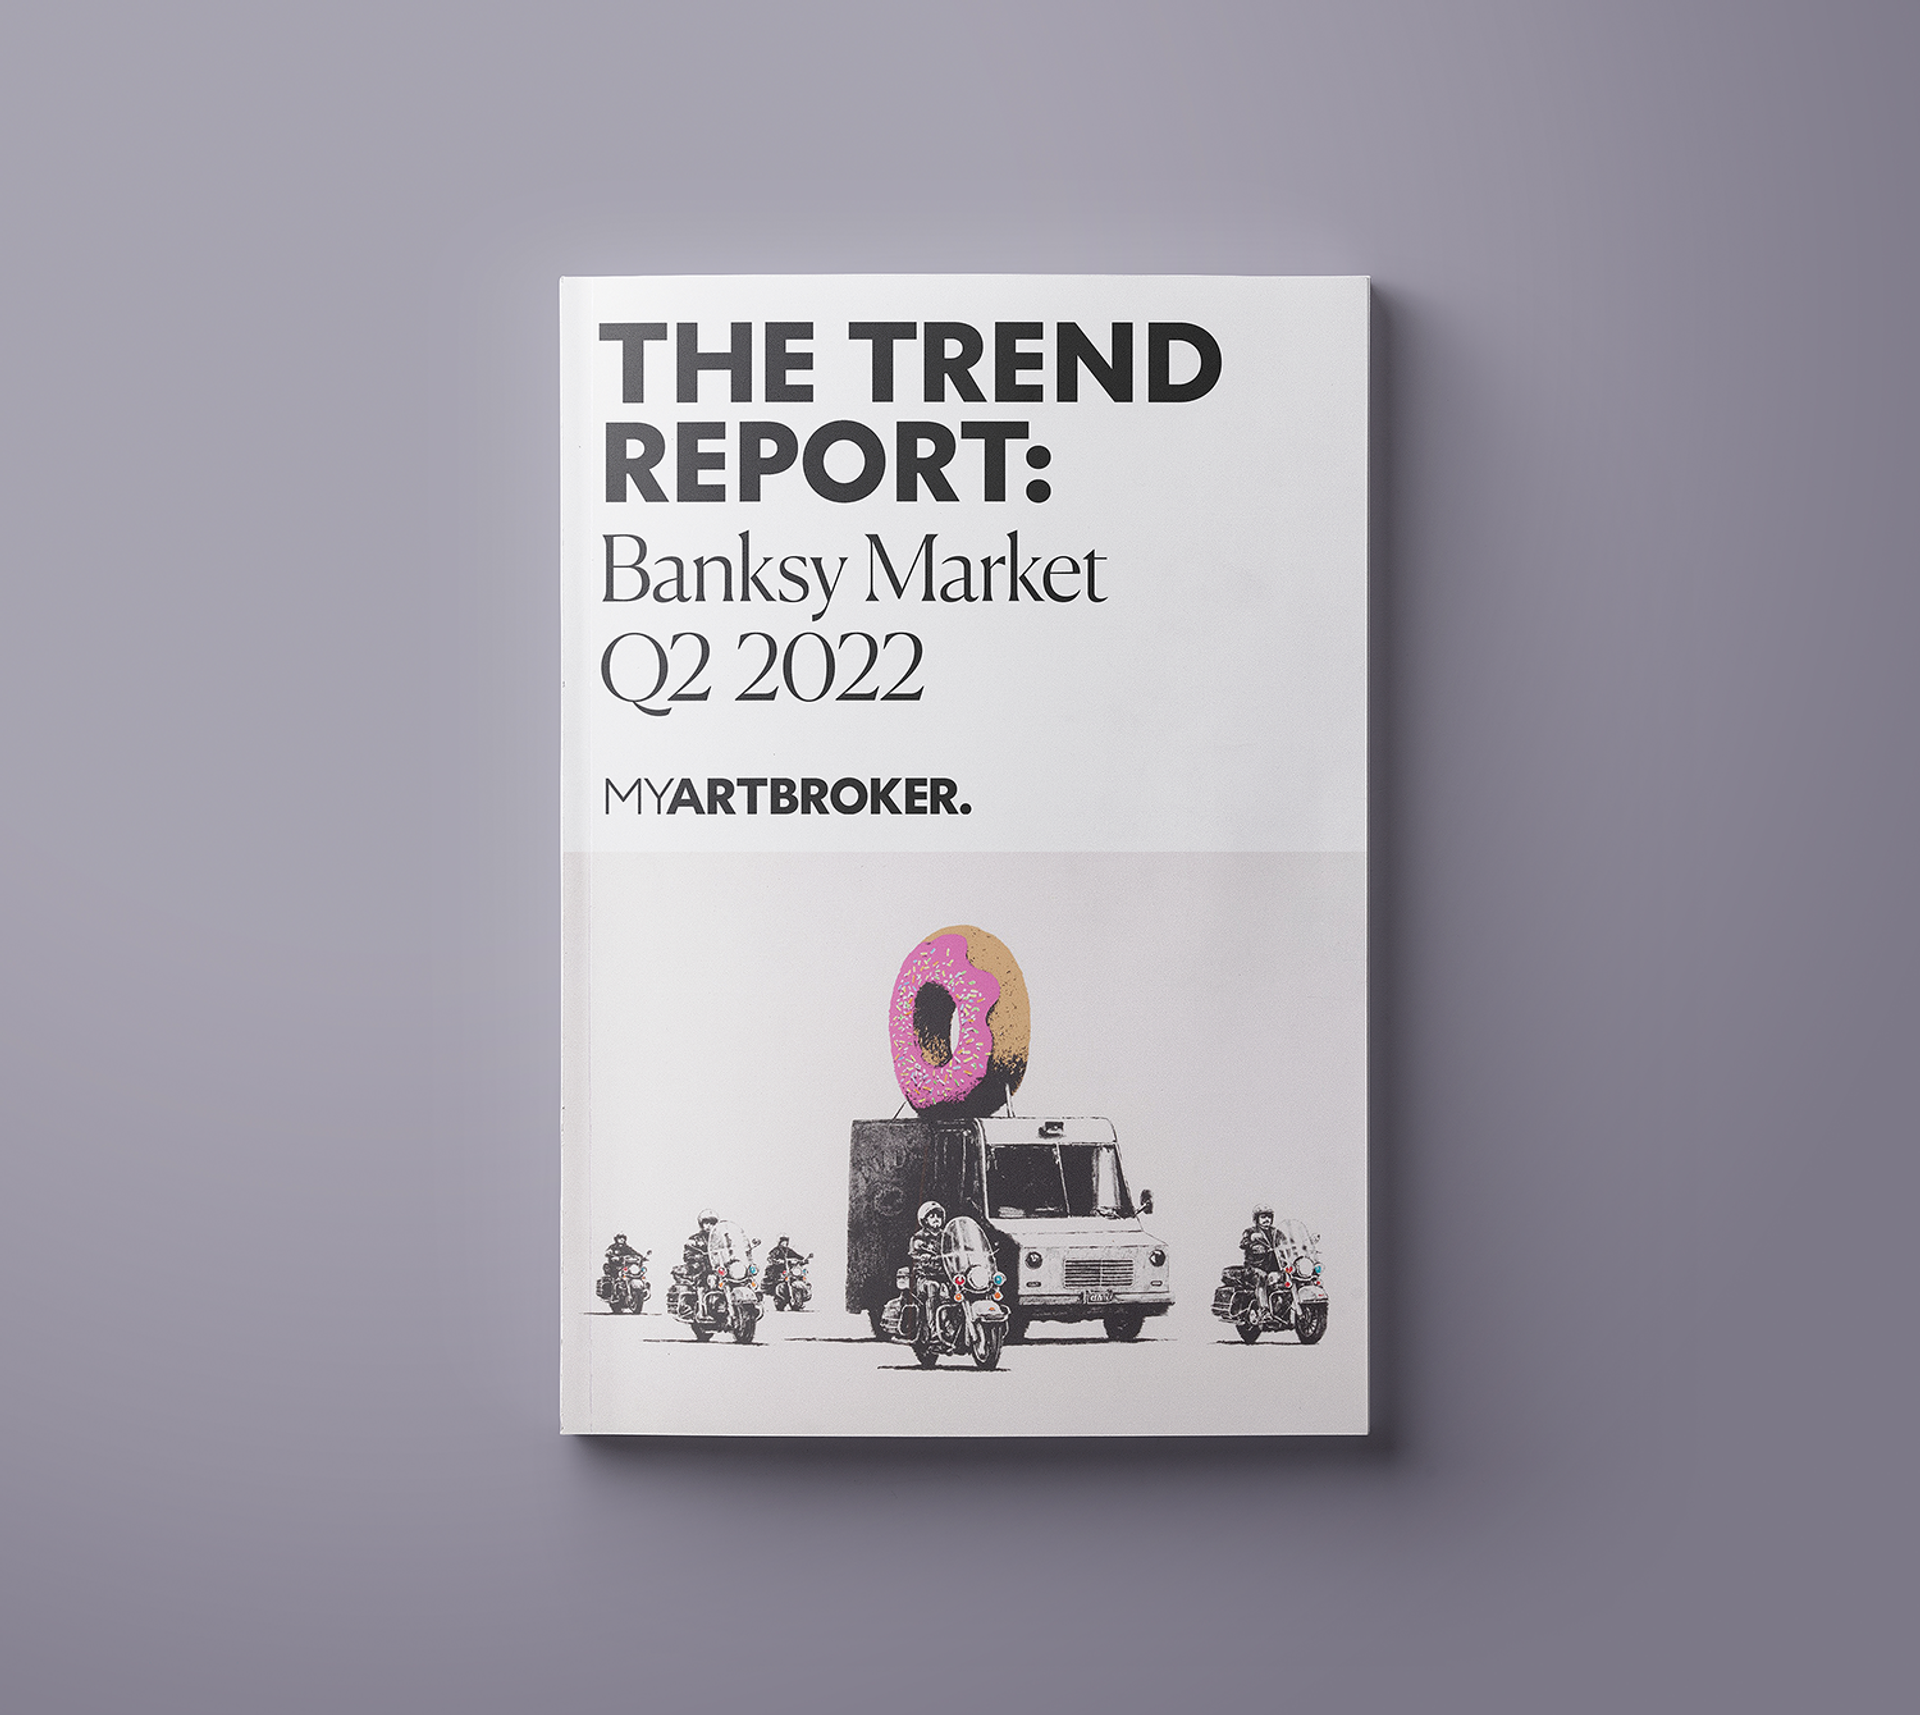 Banksy Market Q2 2022: The Trend Report